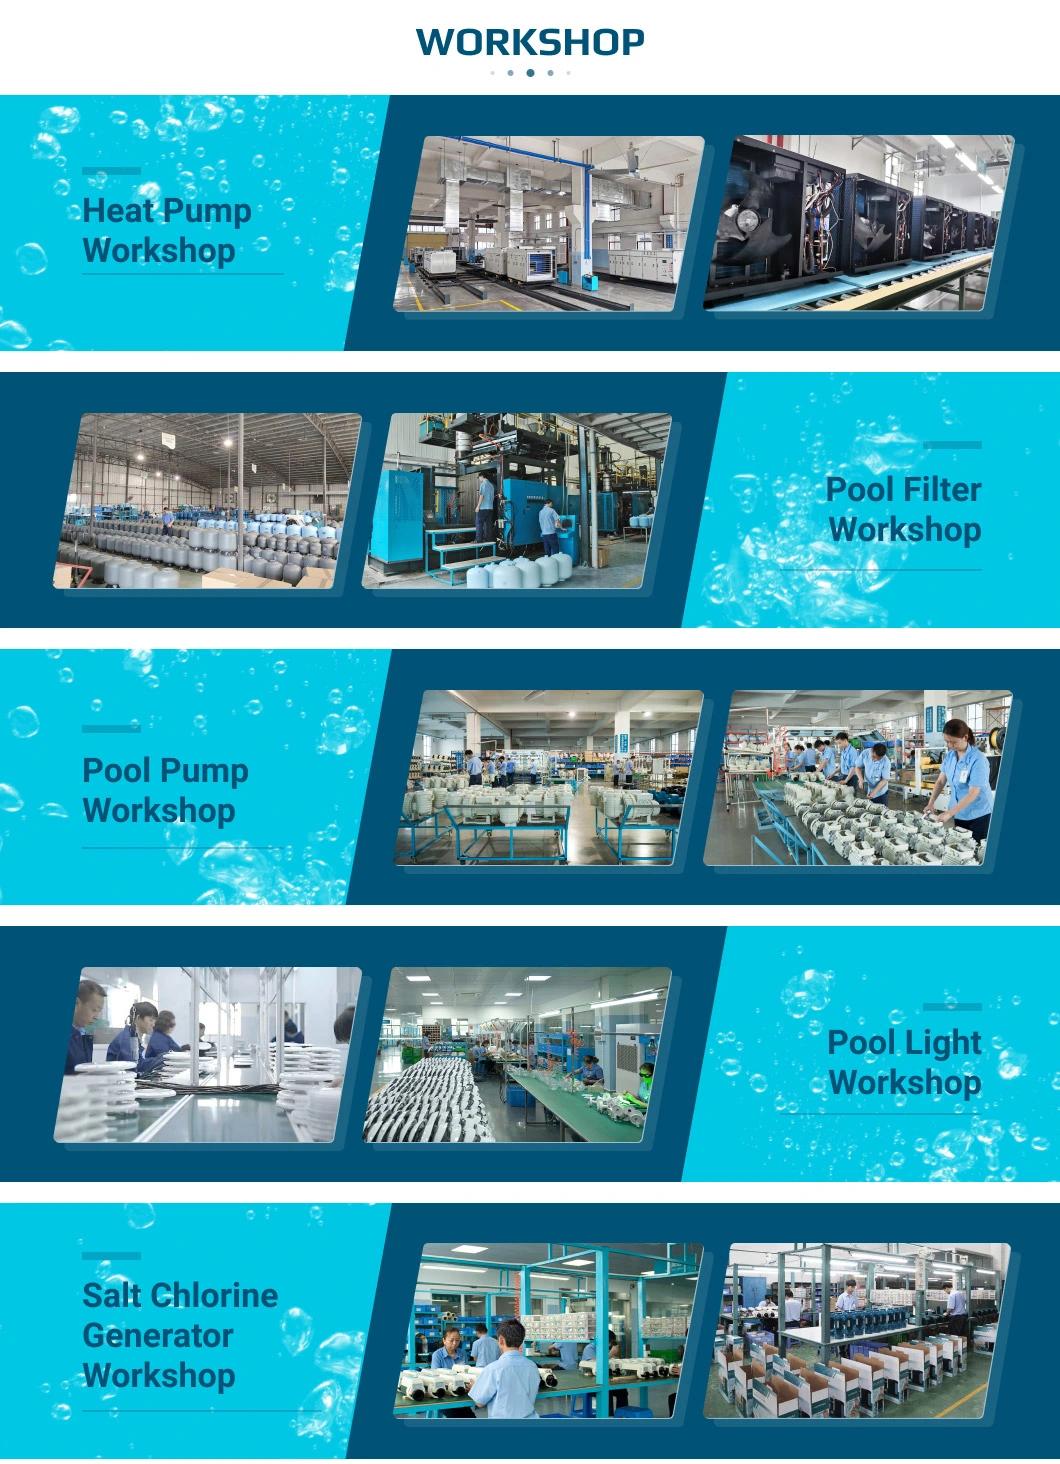 Plastic CE Approved Laswim China PAR Lights Swimming Pool LED Mag Series